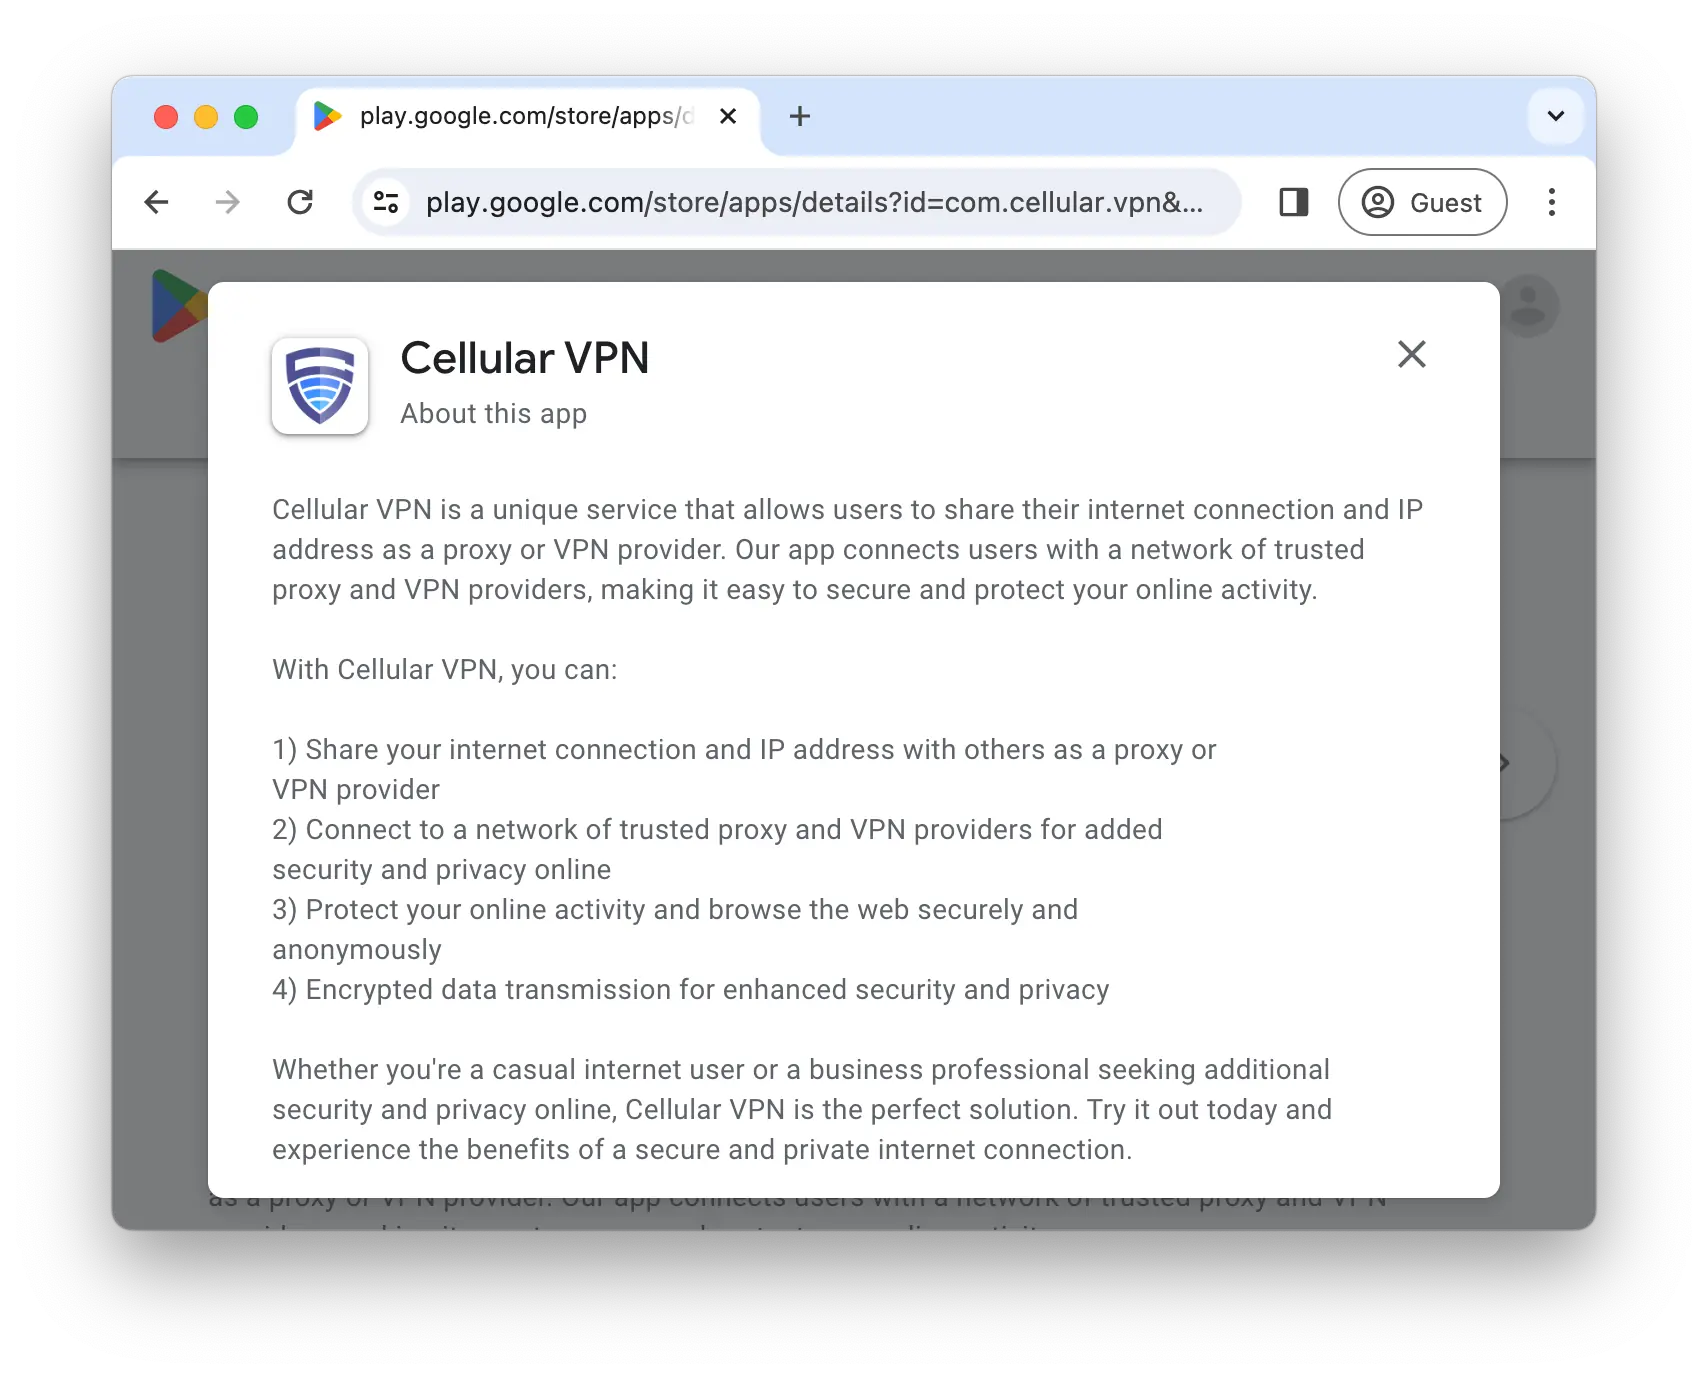 Cellular VPN's description on the Google Play Store